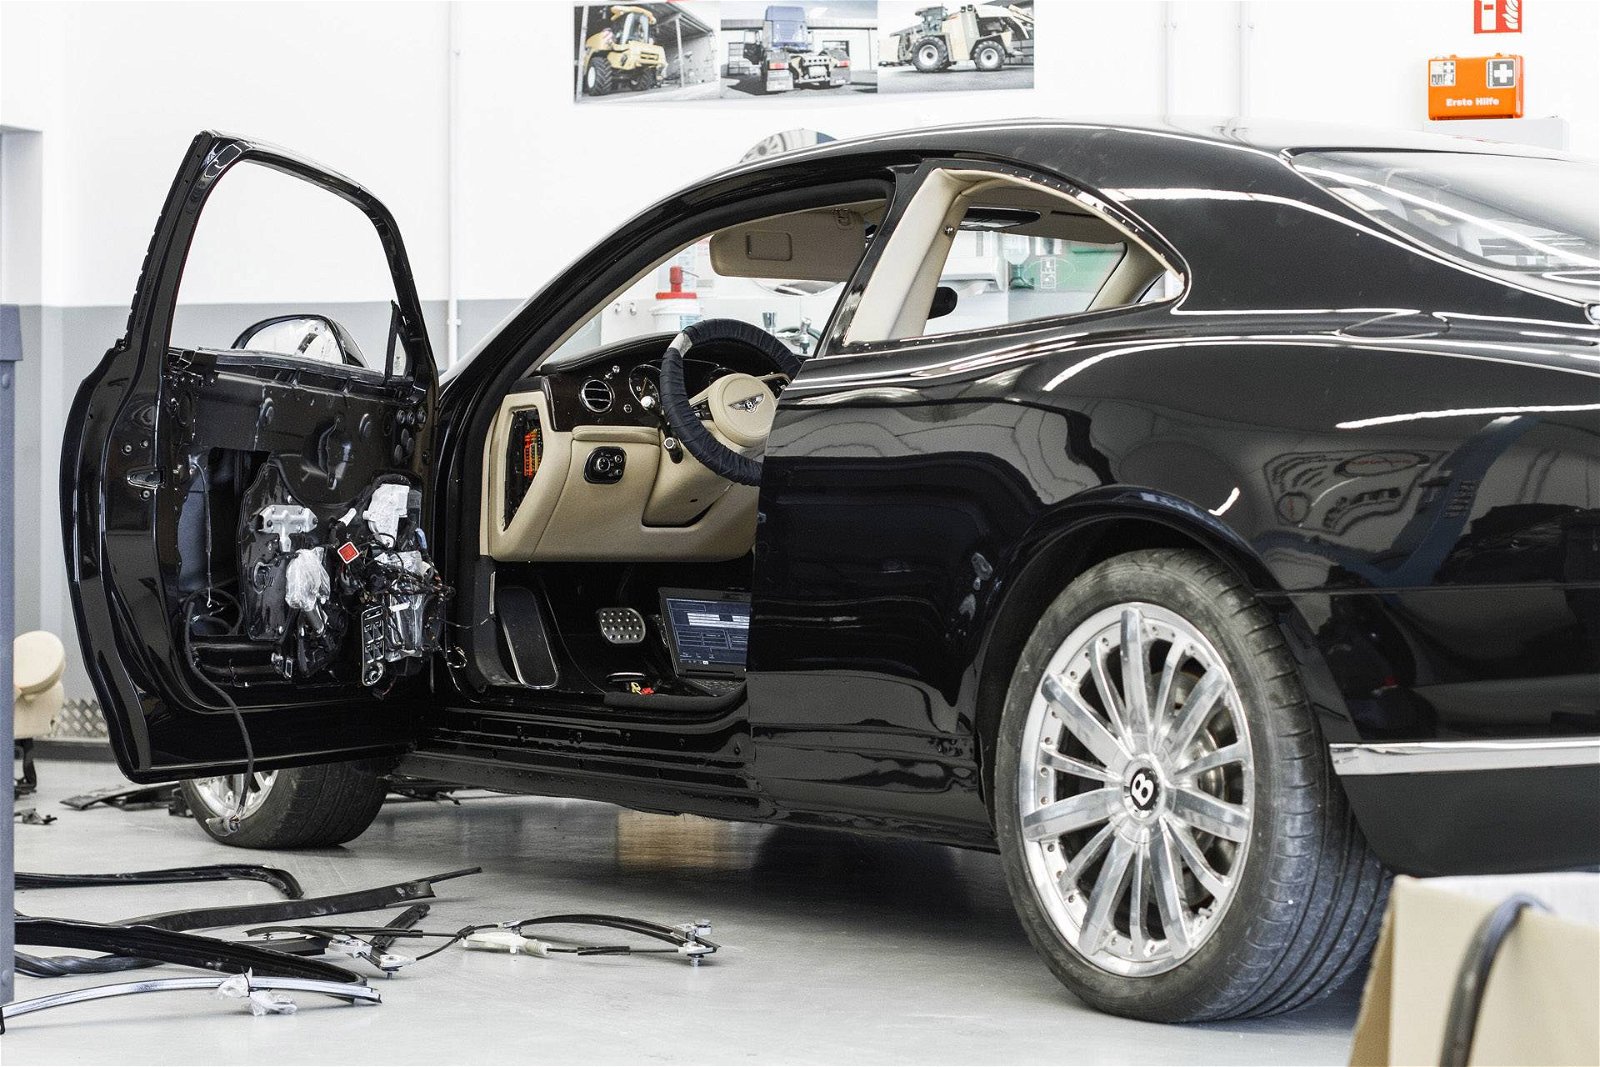 Bentley-Mulsanne-Coupe-conversion-by-McChip-DKR-20